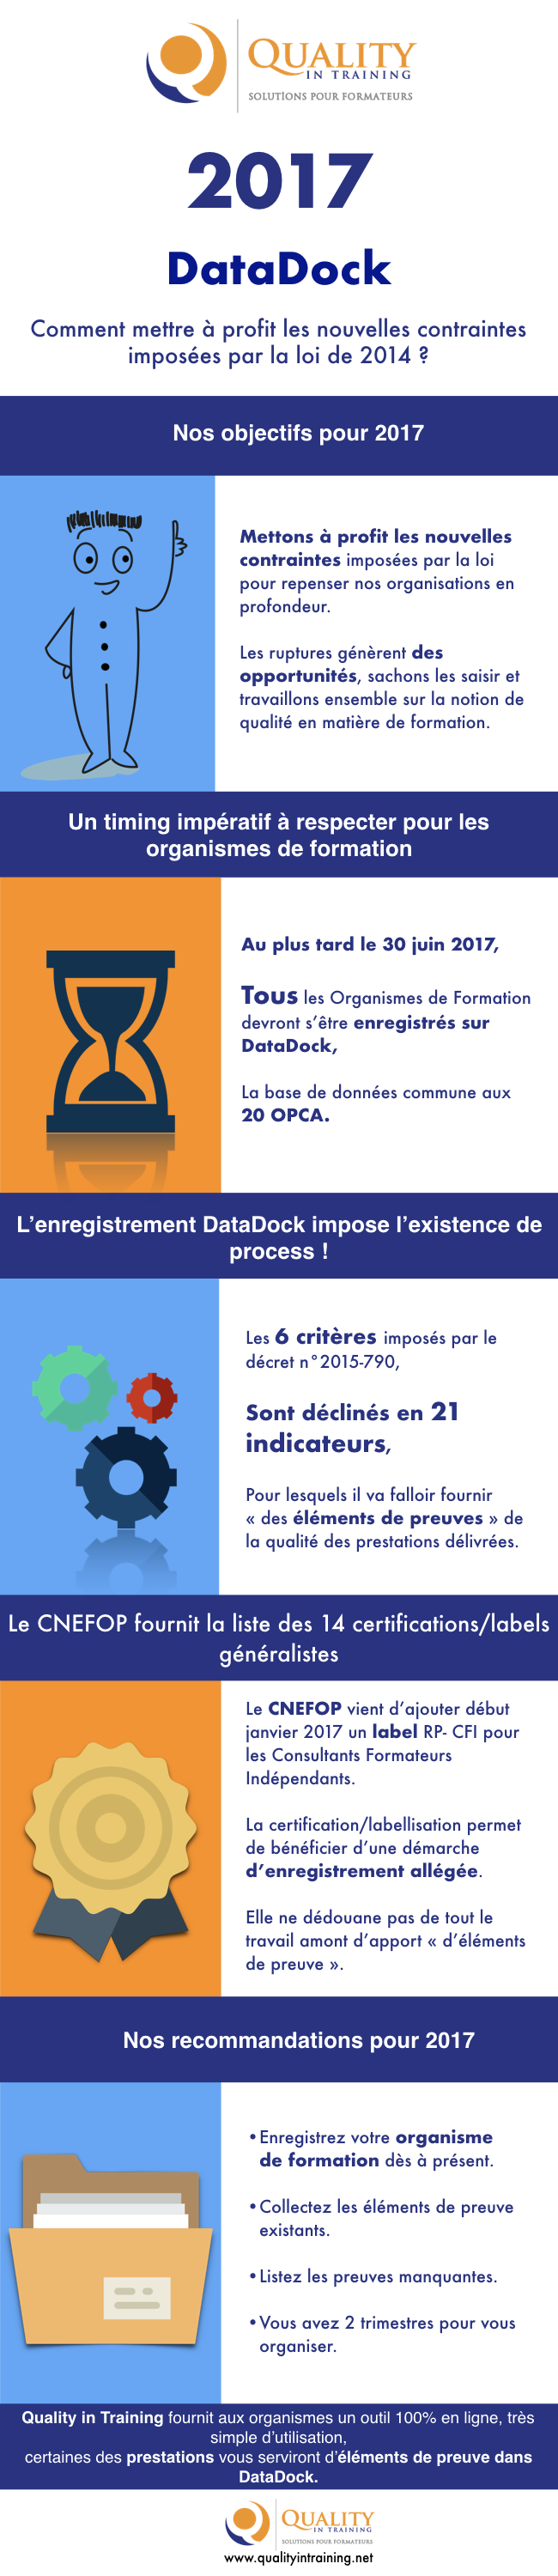 infographie Datadock